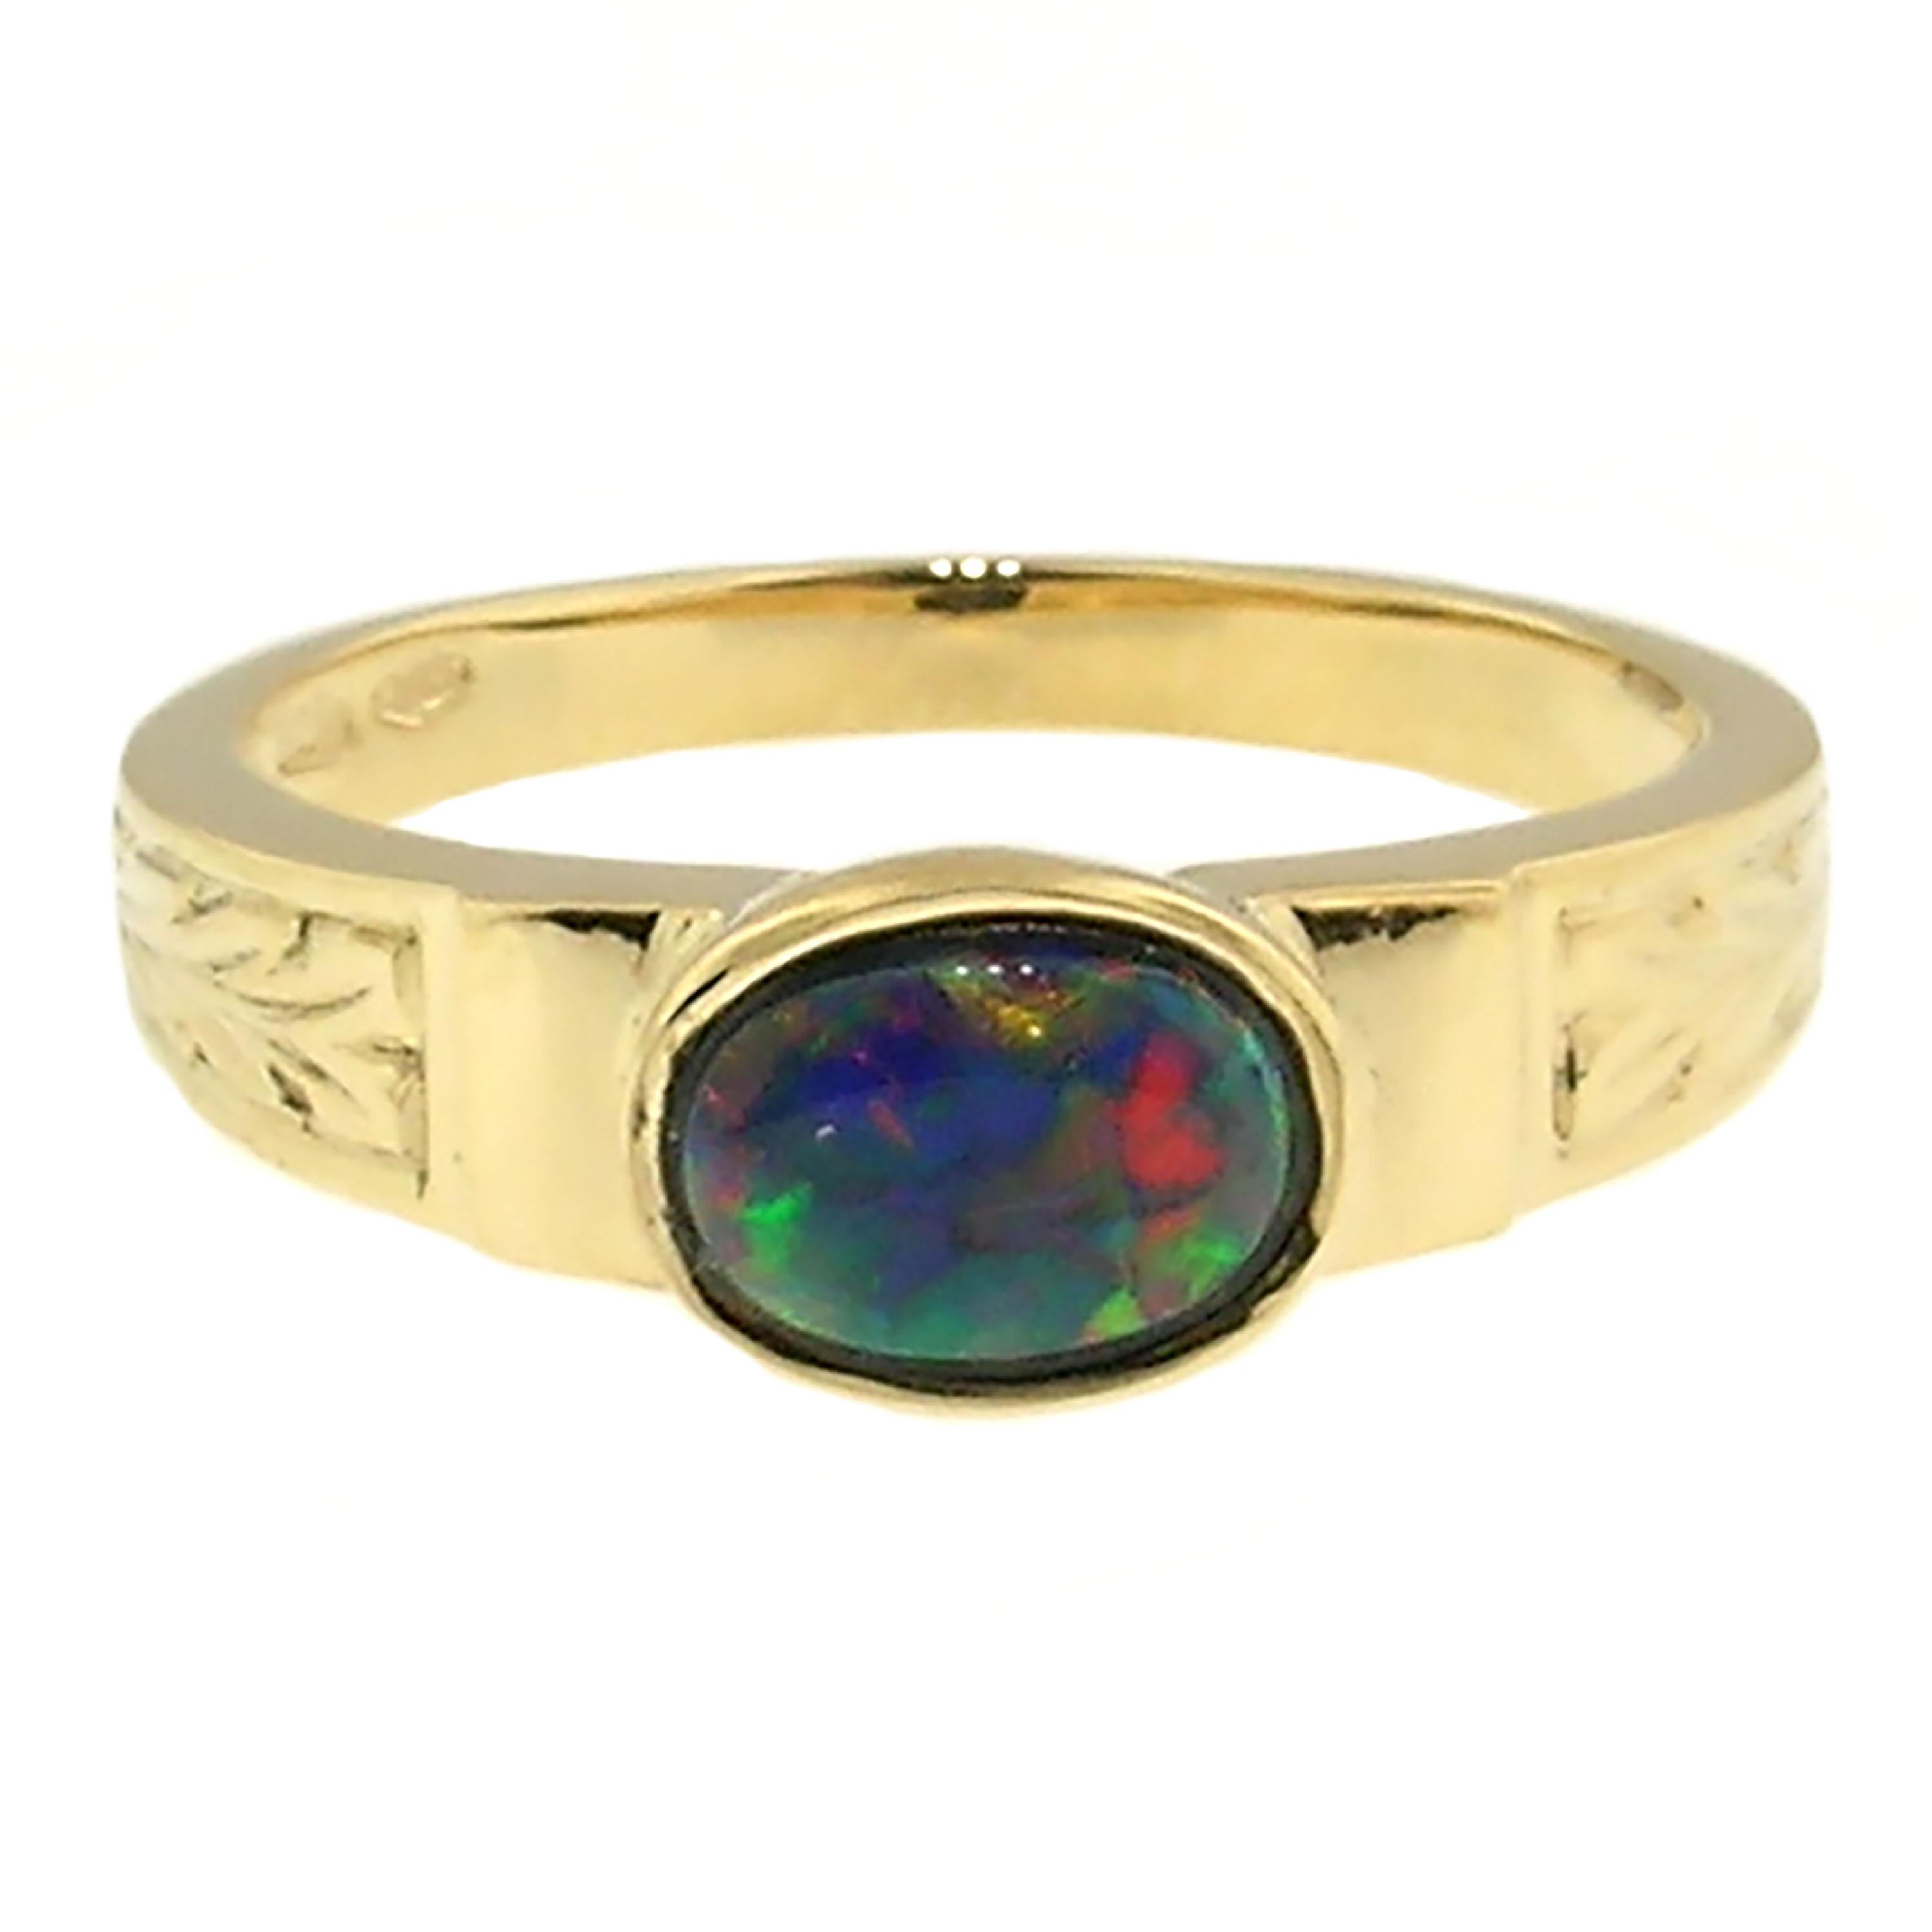 Oval Cut 18 Karat Hand Engraved Ring with Lightening Ridge Black Opal, Handmade in Italy